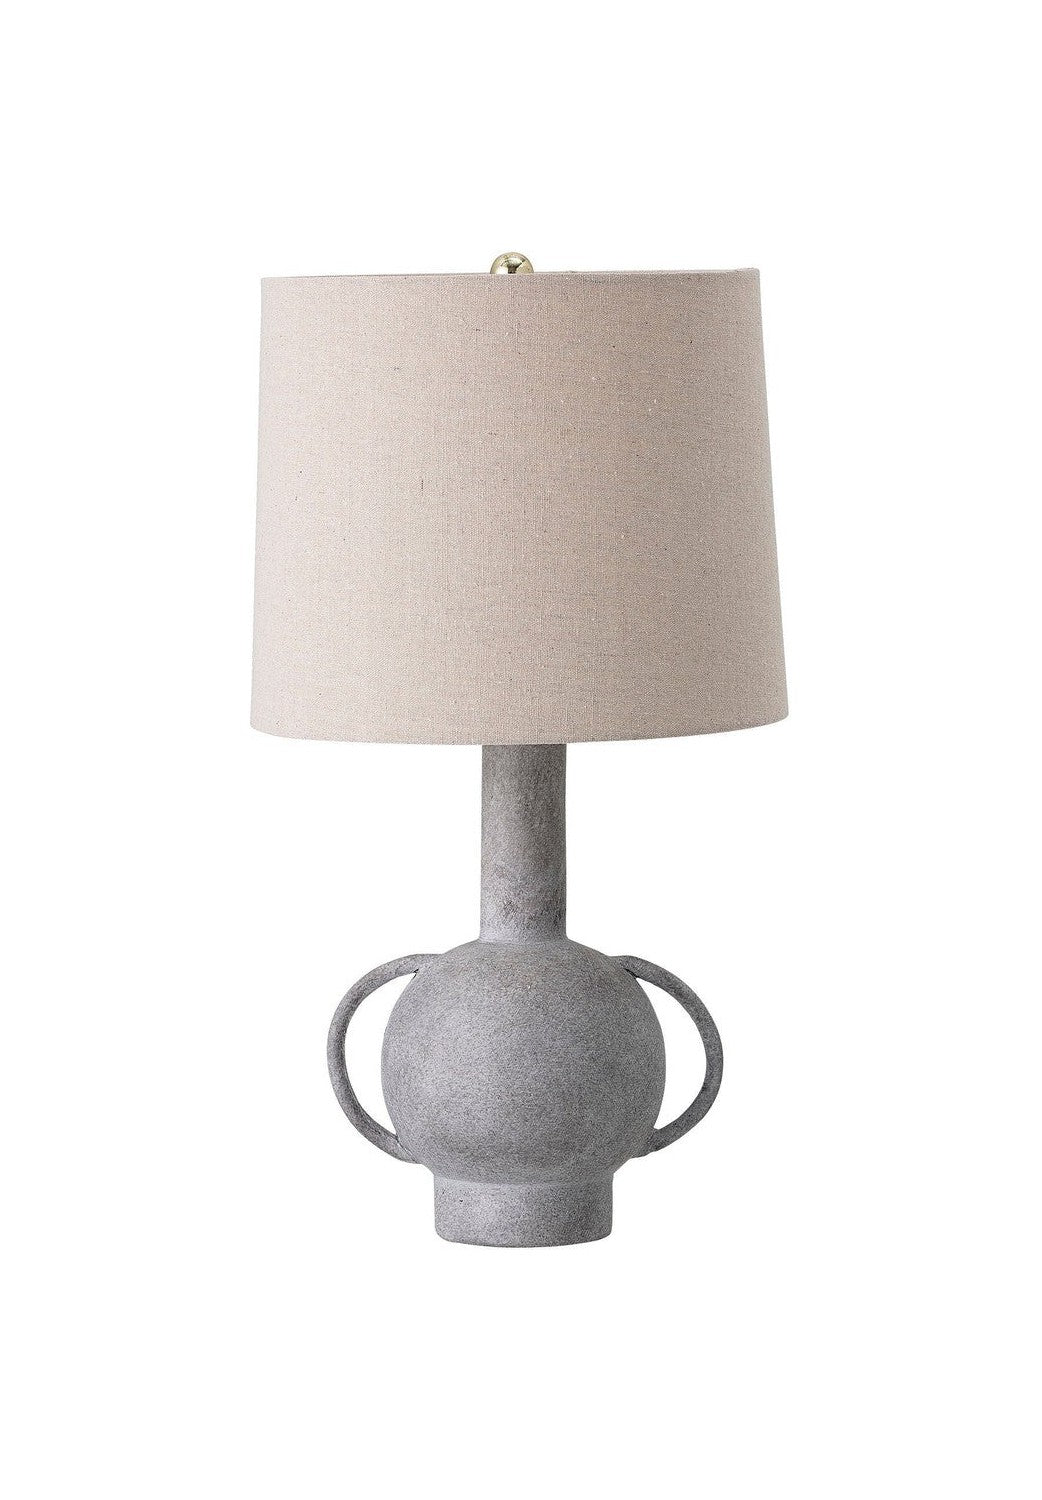 Bloomingville Kean Table lamp, Grey, Terracotta